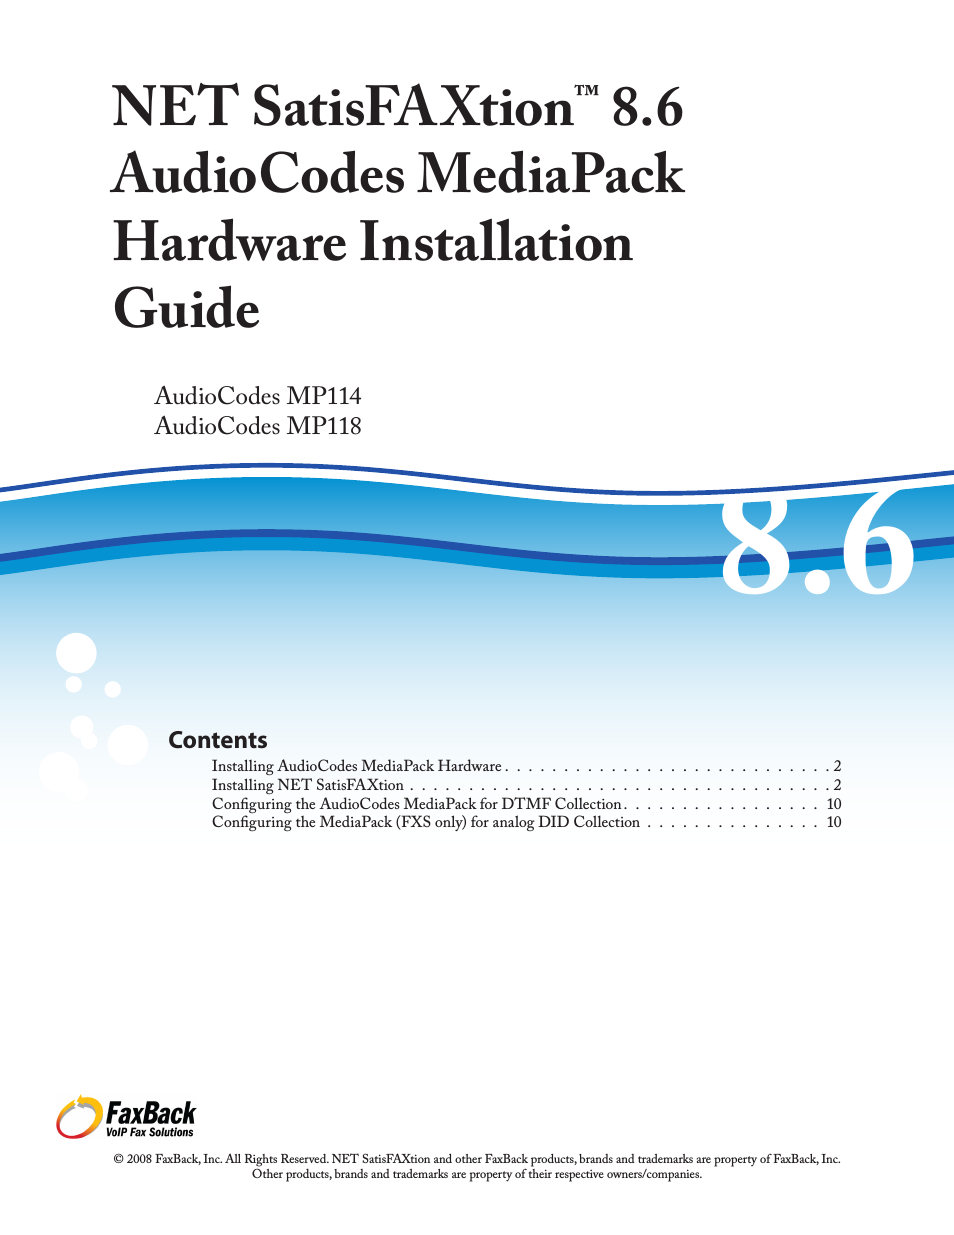 NET SatisFAXtion 8.6 - AudioCodes MediaPack Hardware Installation Guide